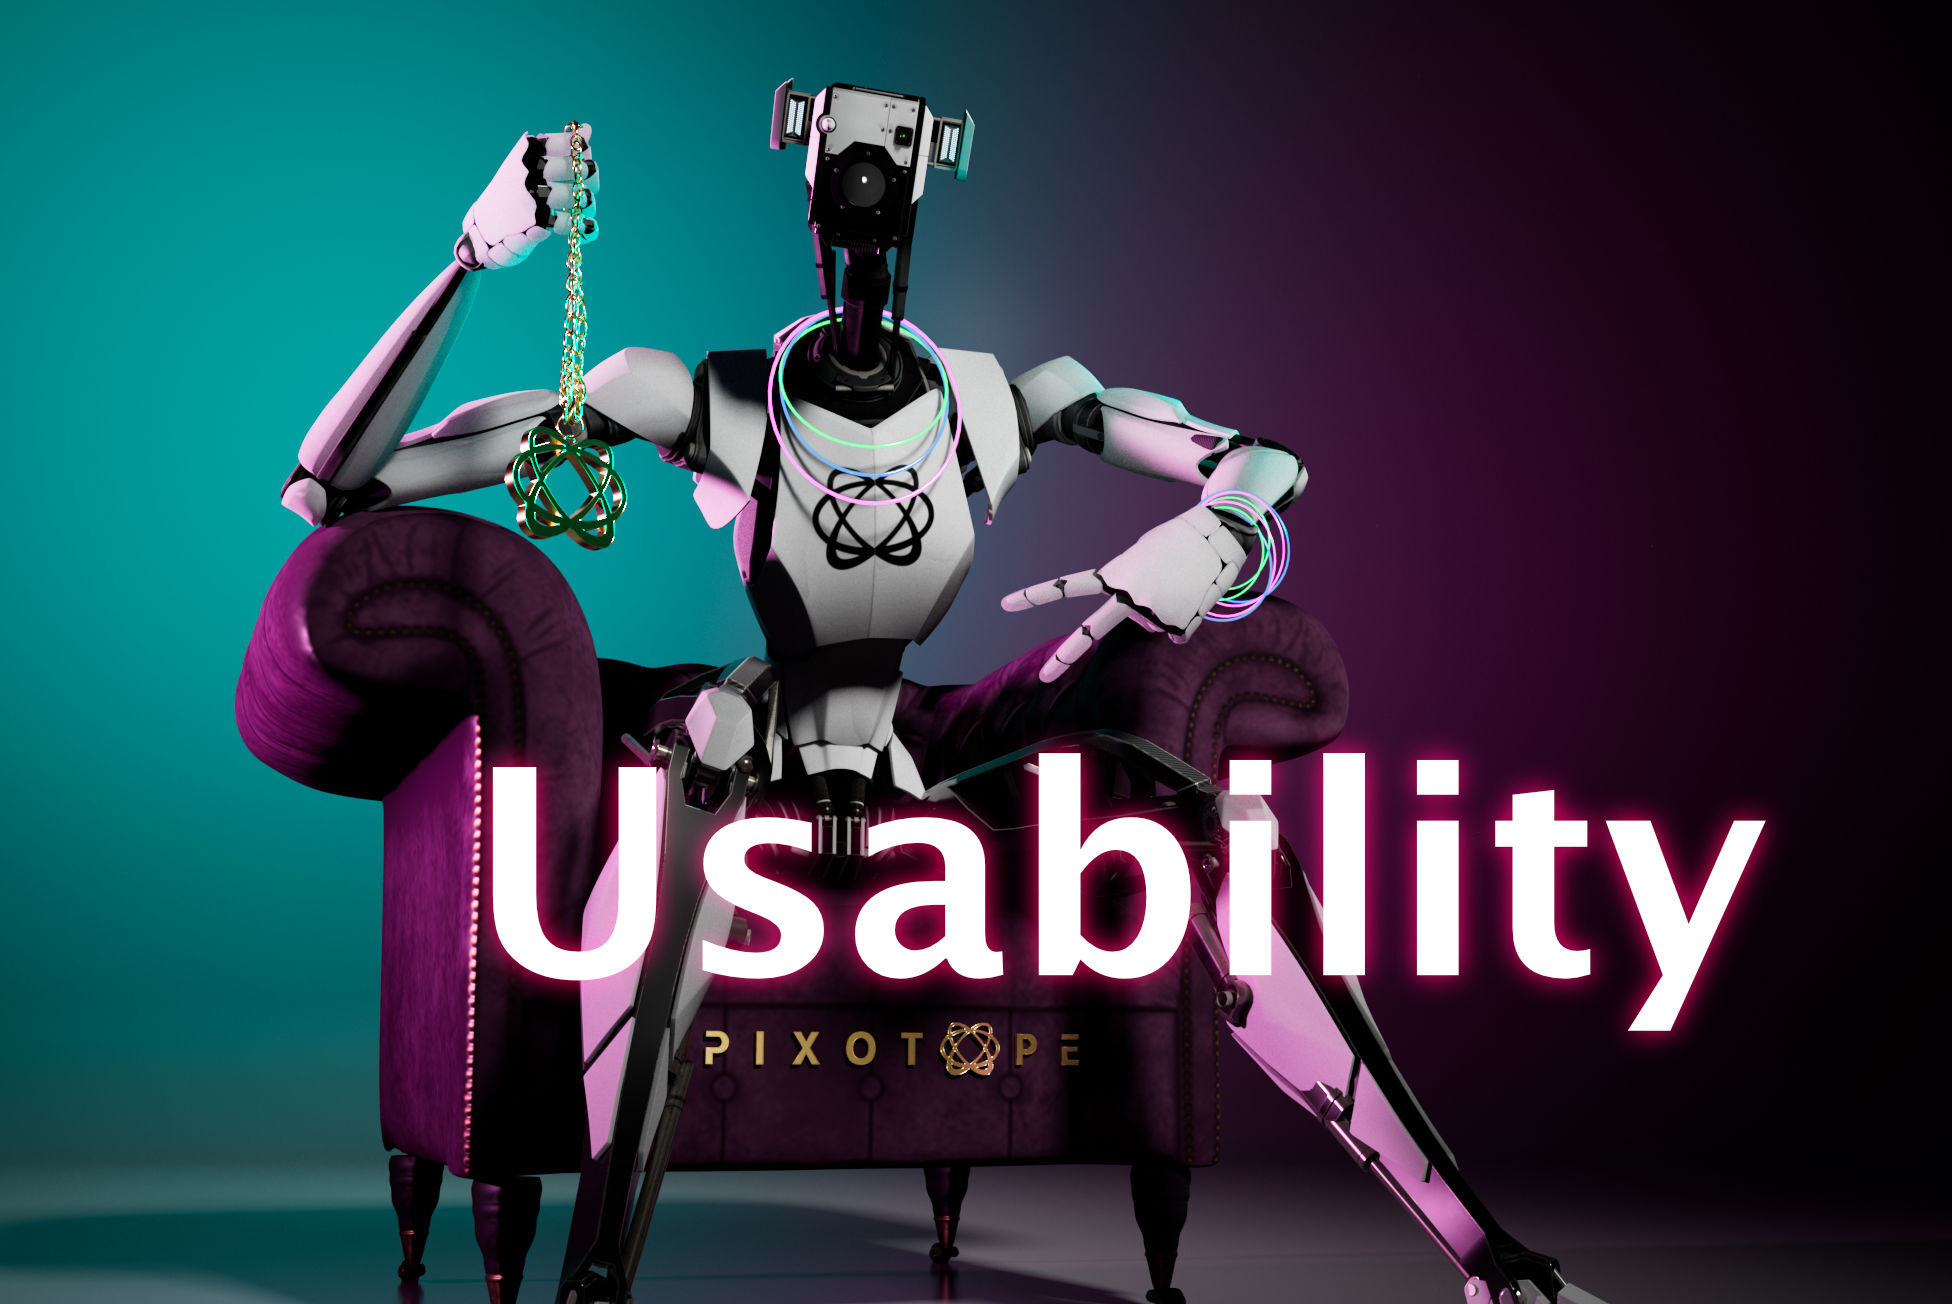 Pixotope 2.0 - Usability